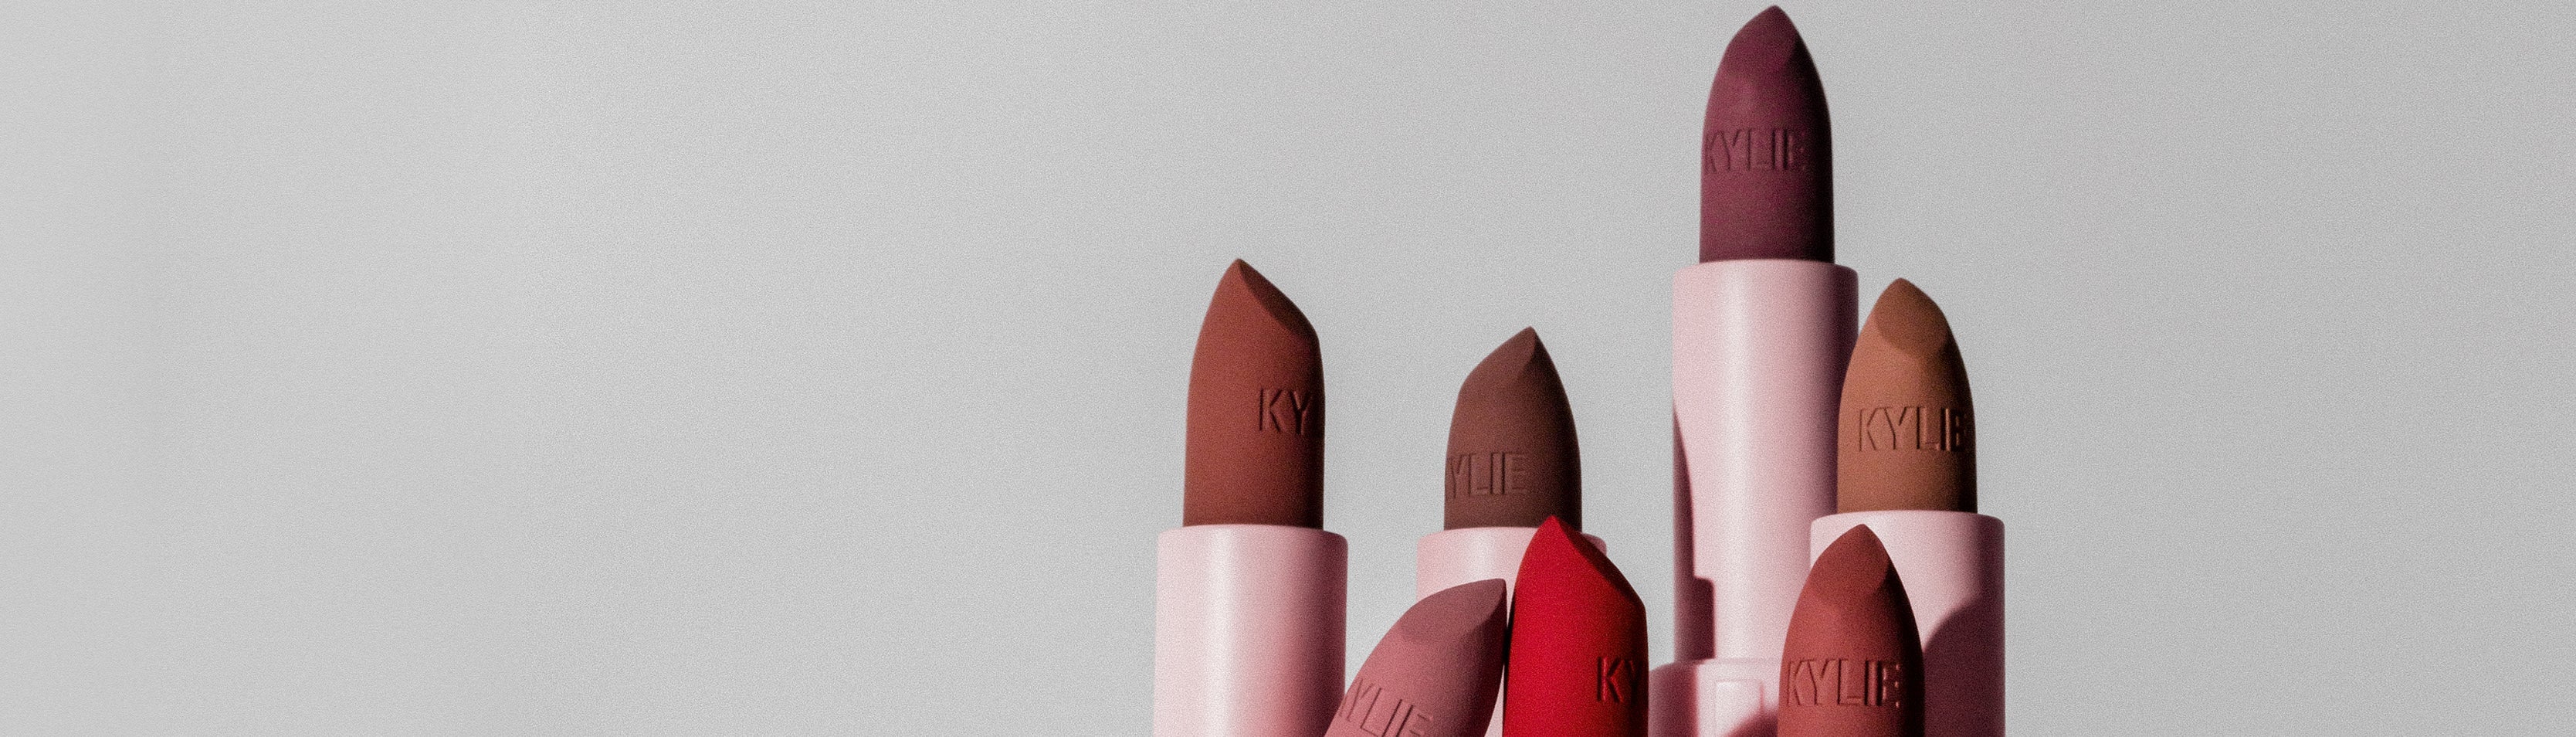 Kylie Cosmetics - Lips - Lipsticks - Matte Lipsticks